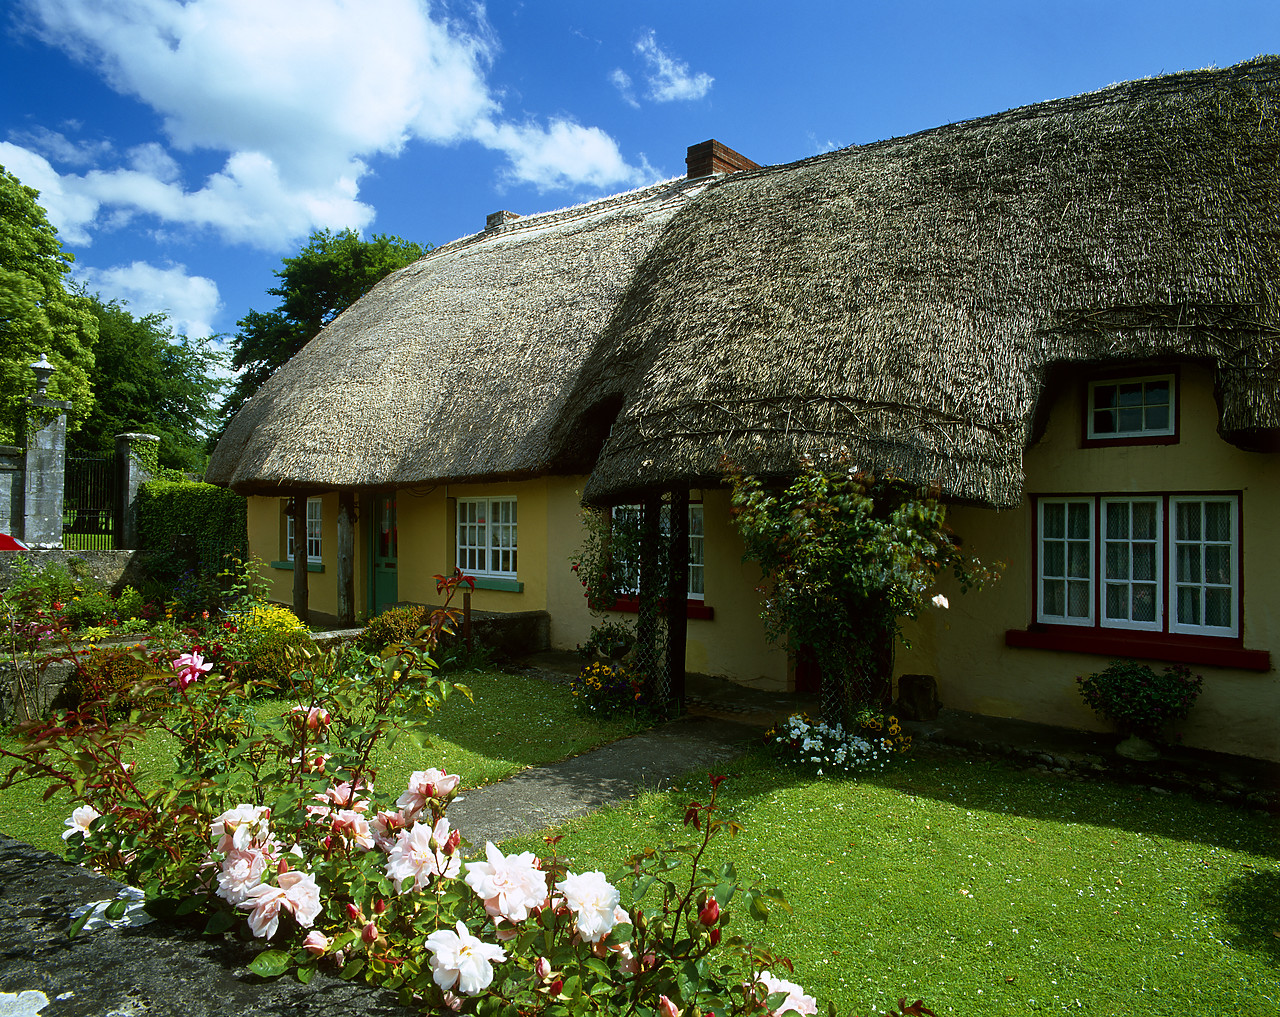 #030244-1 - Thatch Cottage, Adare, County Limerick, Ireland